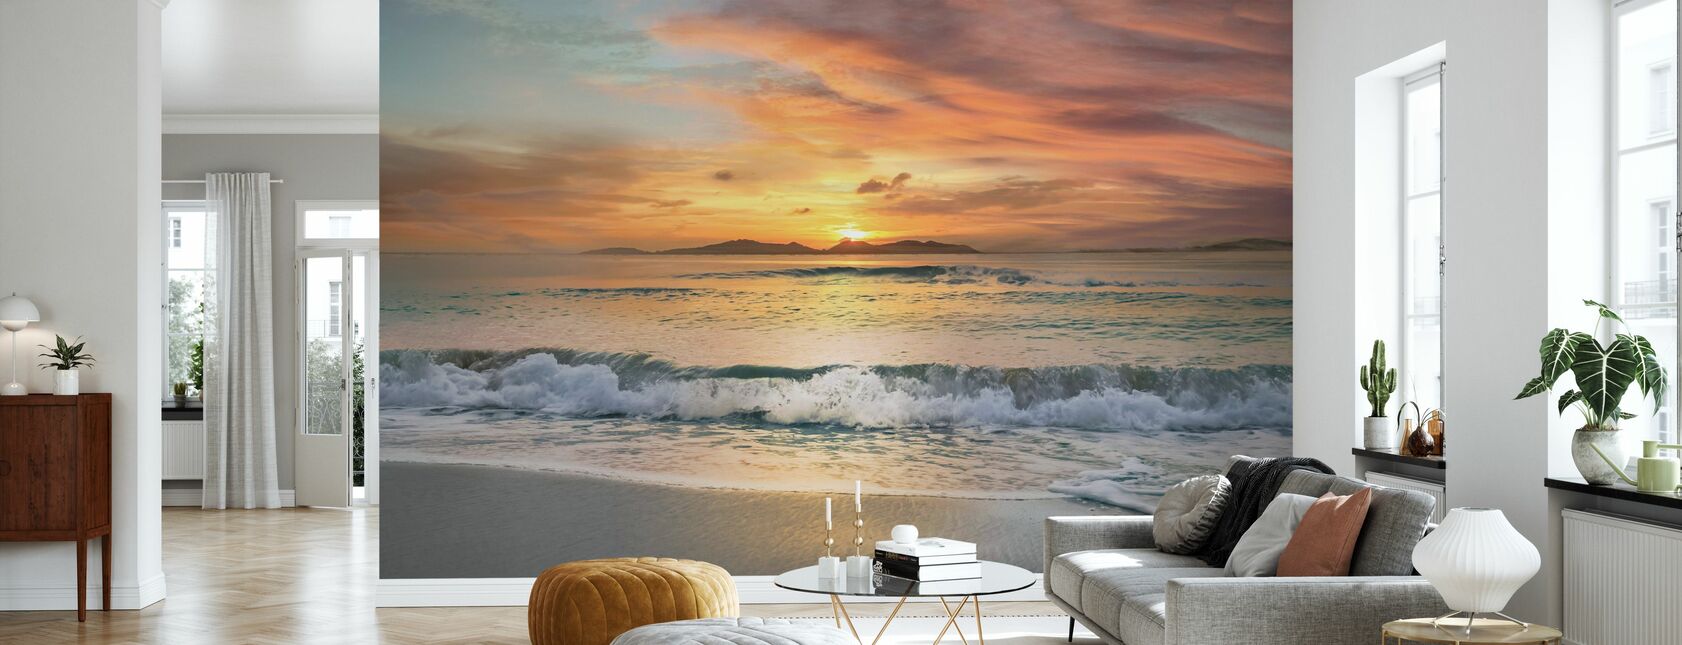 Sunset Beach - Wallpaper - Living Room